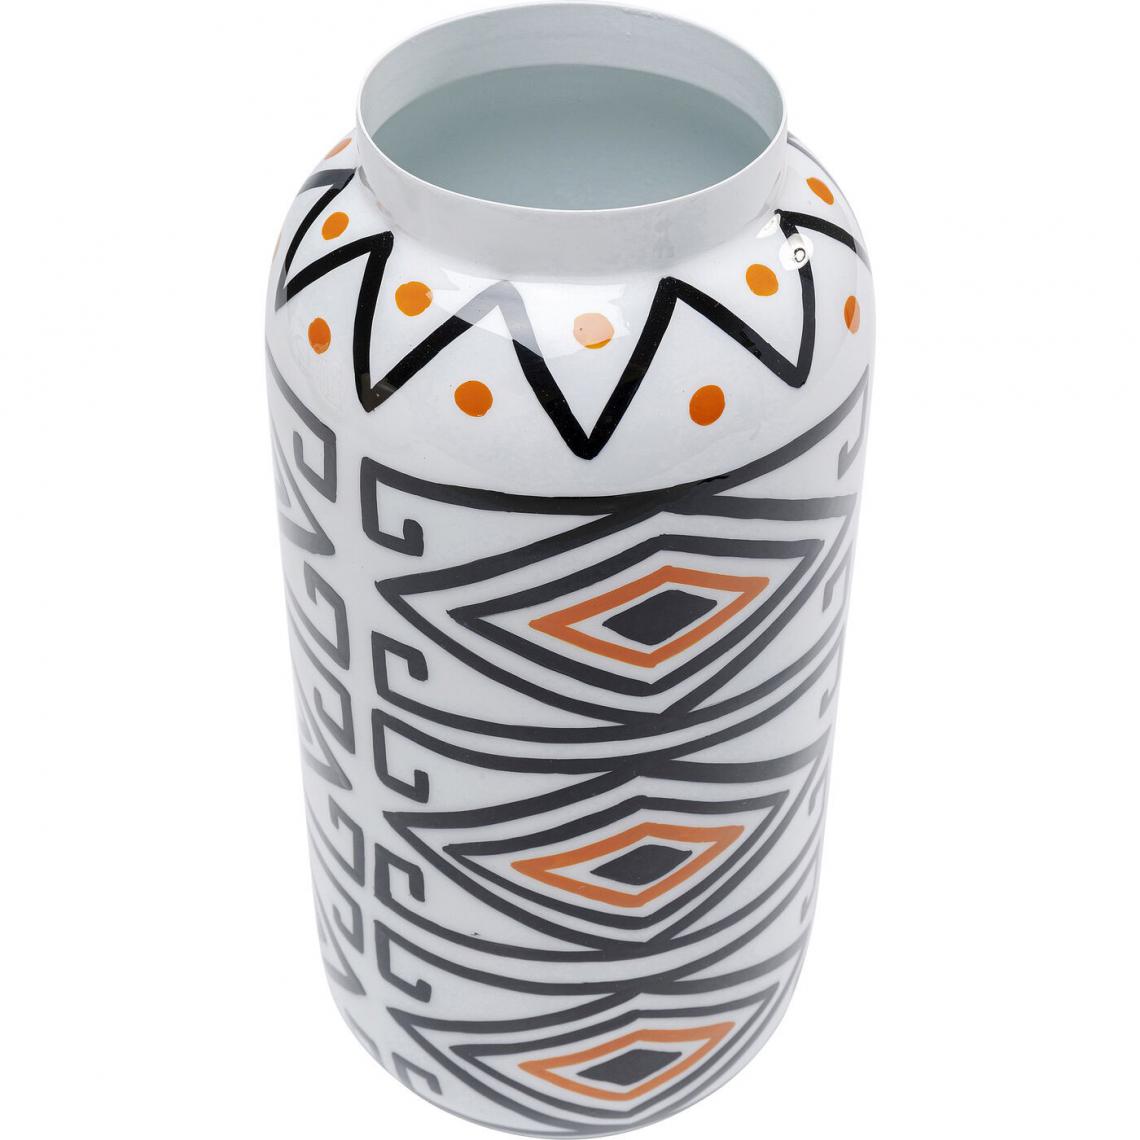 Karedesign - Vase aztèque 29cm Kare Design - Vases